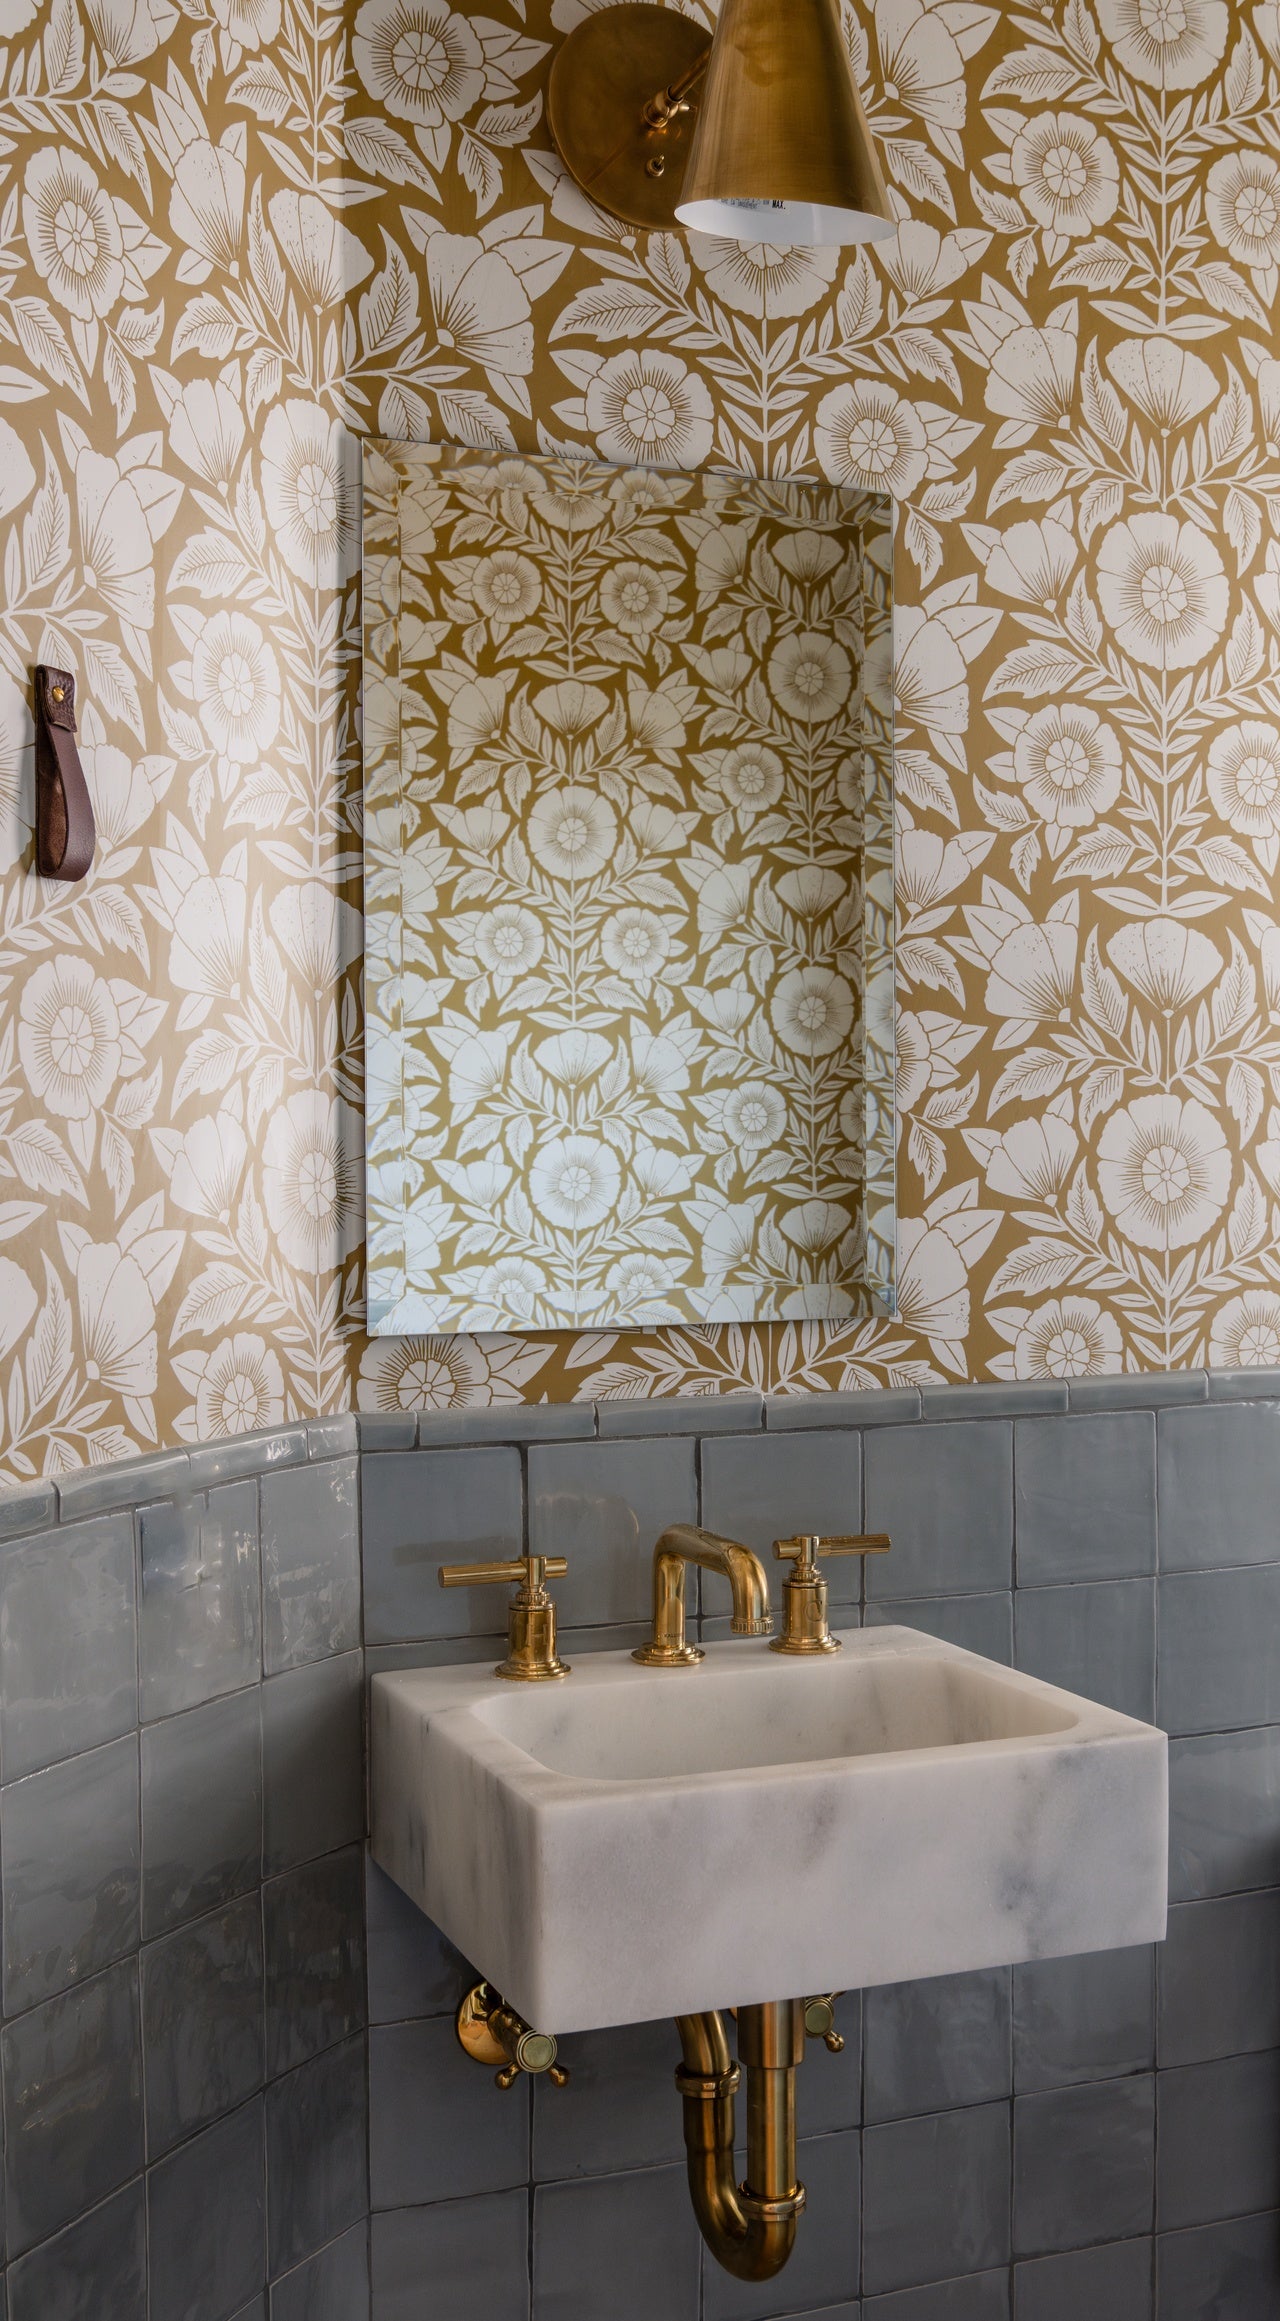 Conservatory (Ochre) Wallpaper in a bathroom designed by Sarah Malek Barney